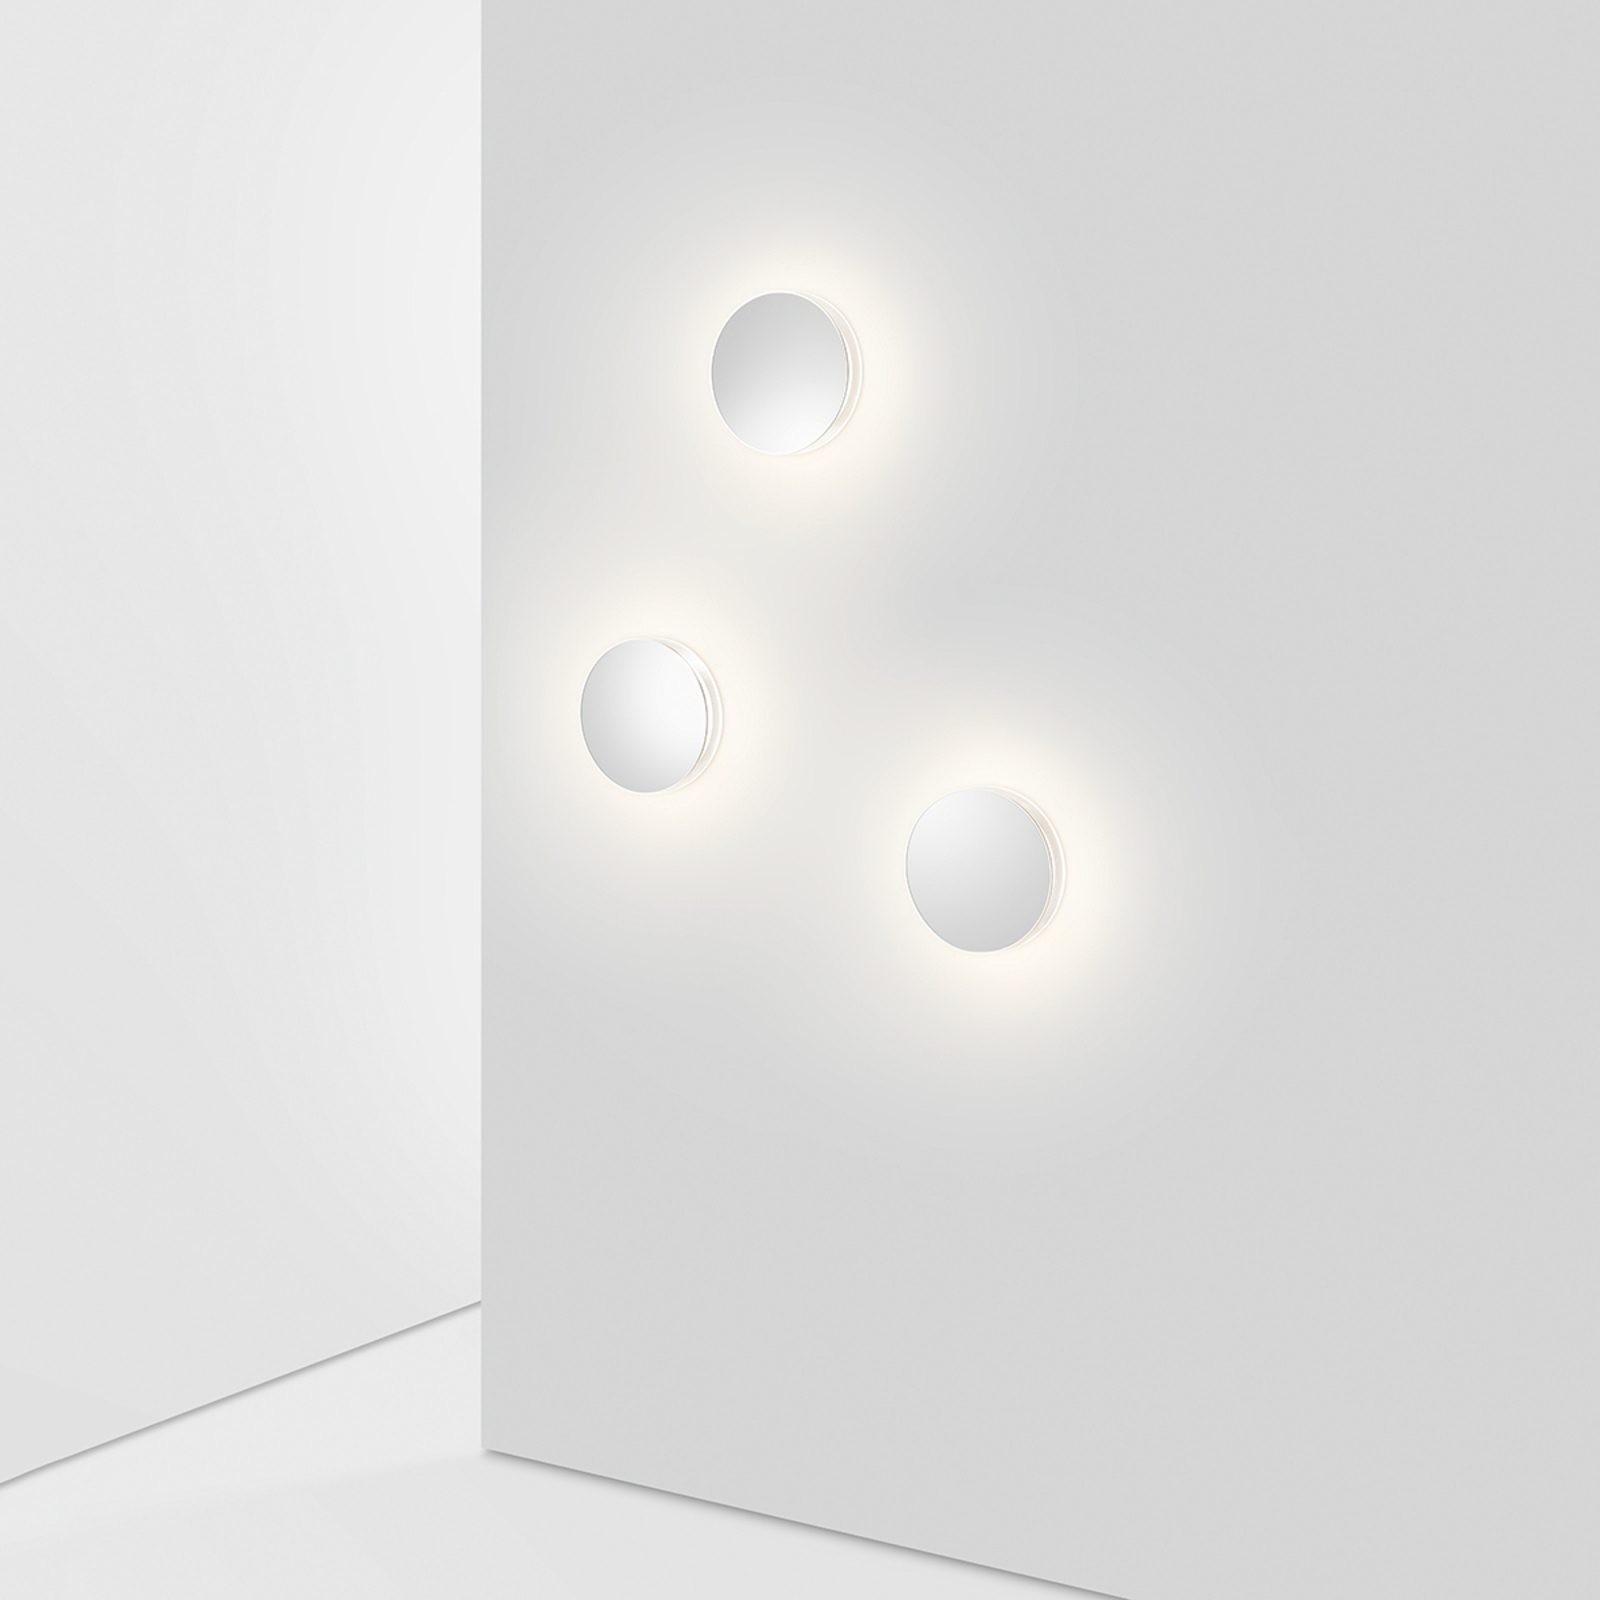 Mirrored LED designer wall light Lid